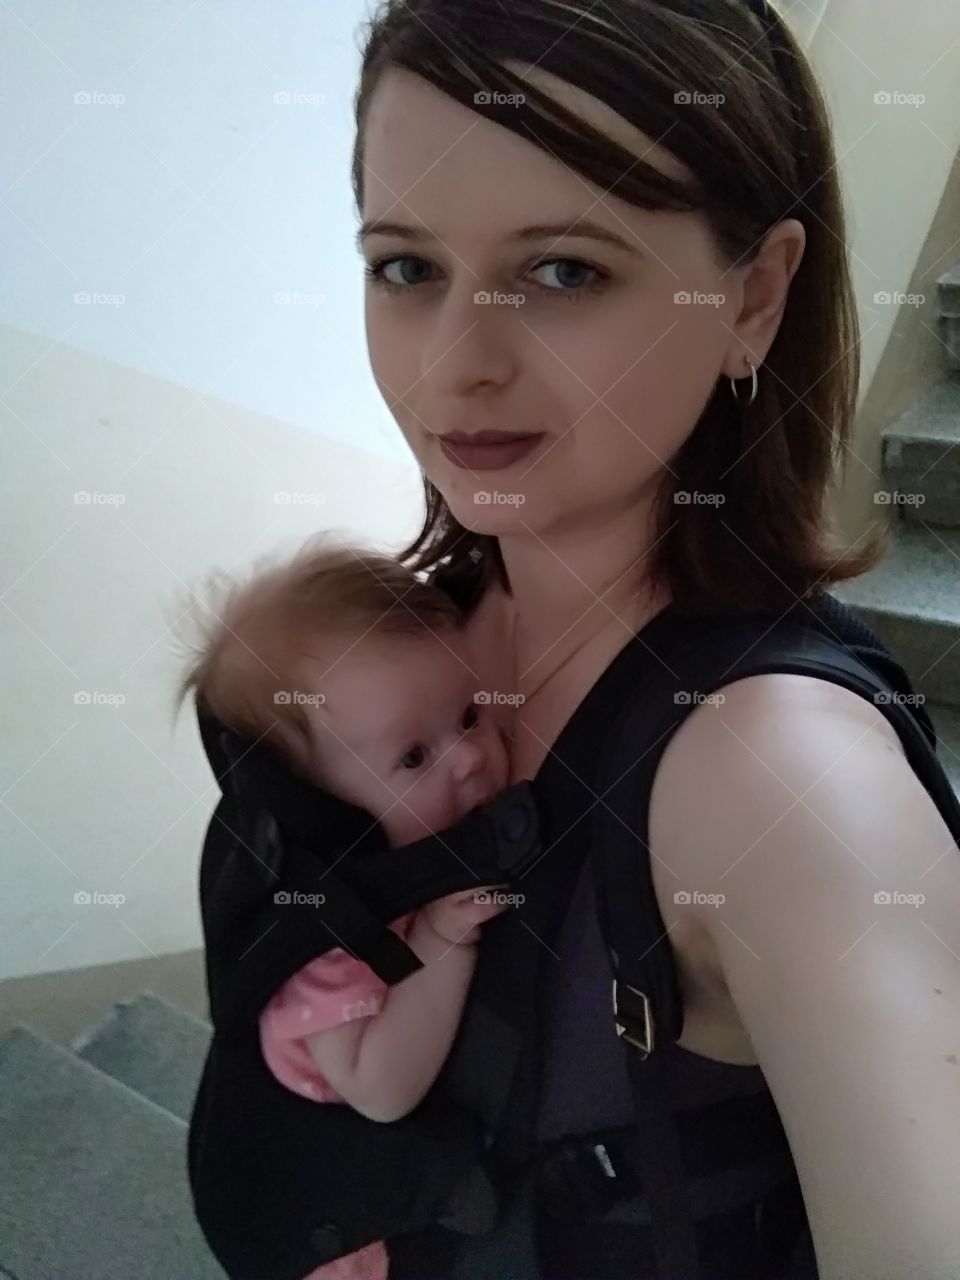 Selfie - Me and my daughter